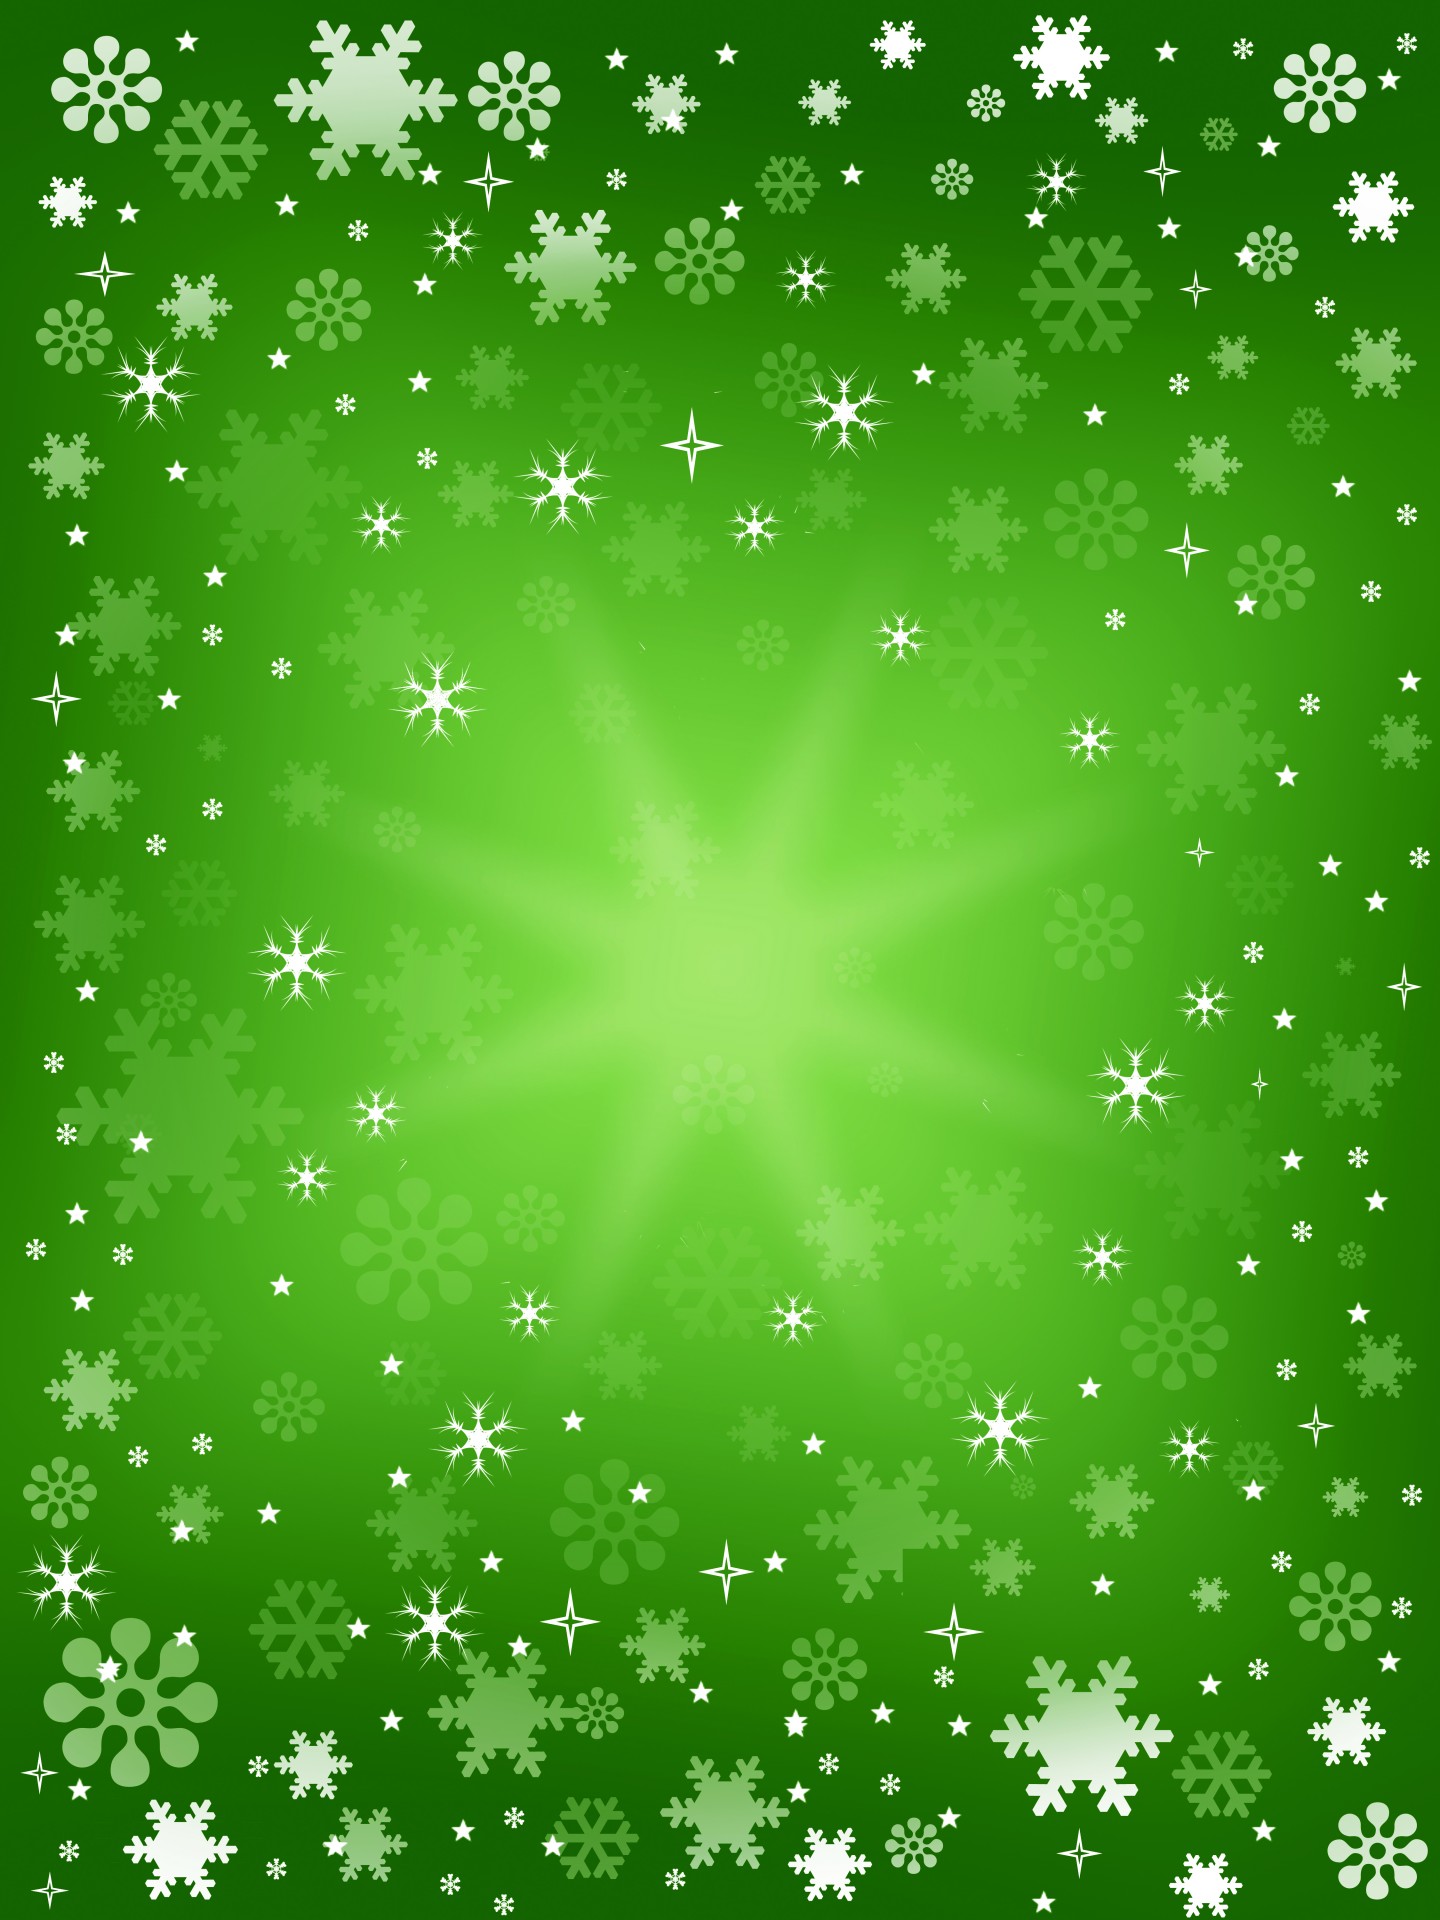  Green  Winter Background  Free Stock Photo Public Domain 